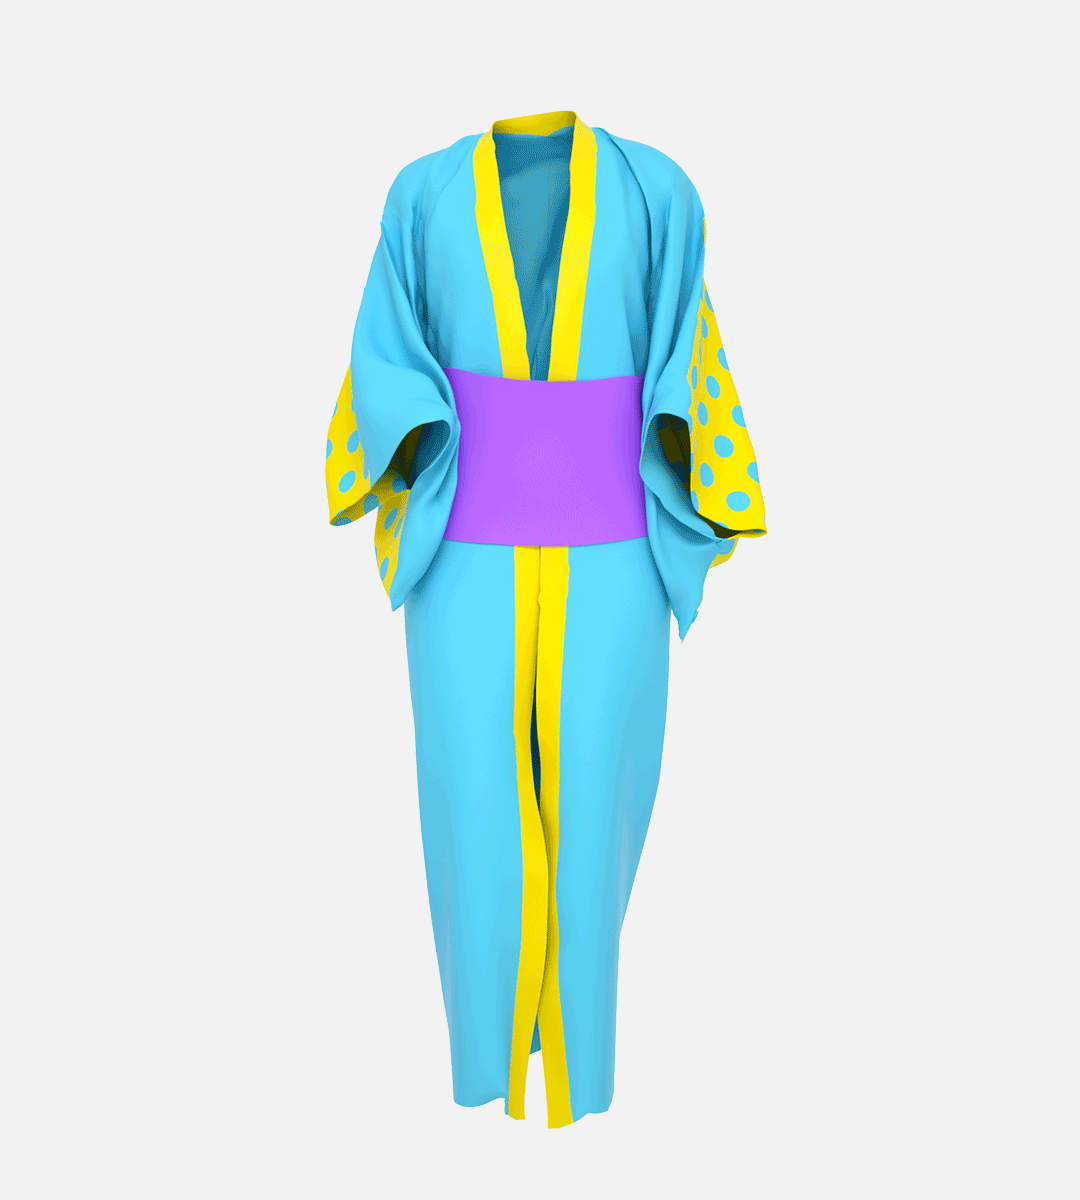 sato-creative-dress-x-kota-yamaji-fashion-design-clothes-3D-AR-augmented-reality-future-digital